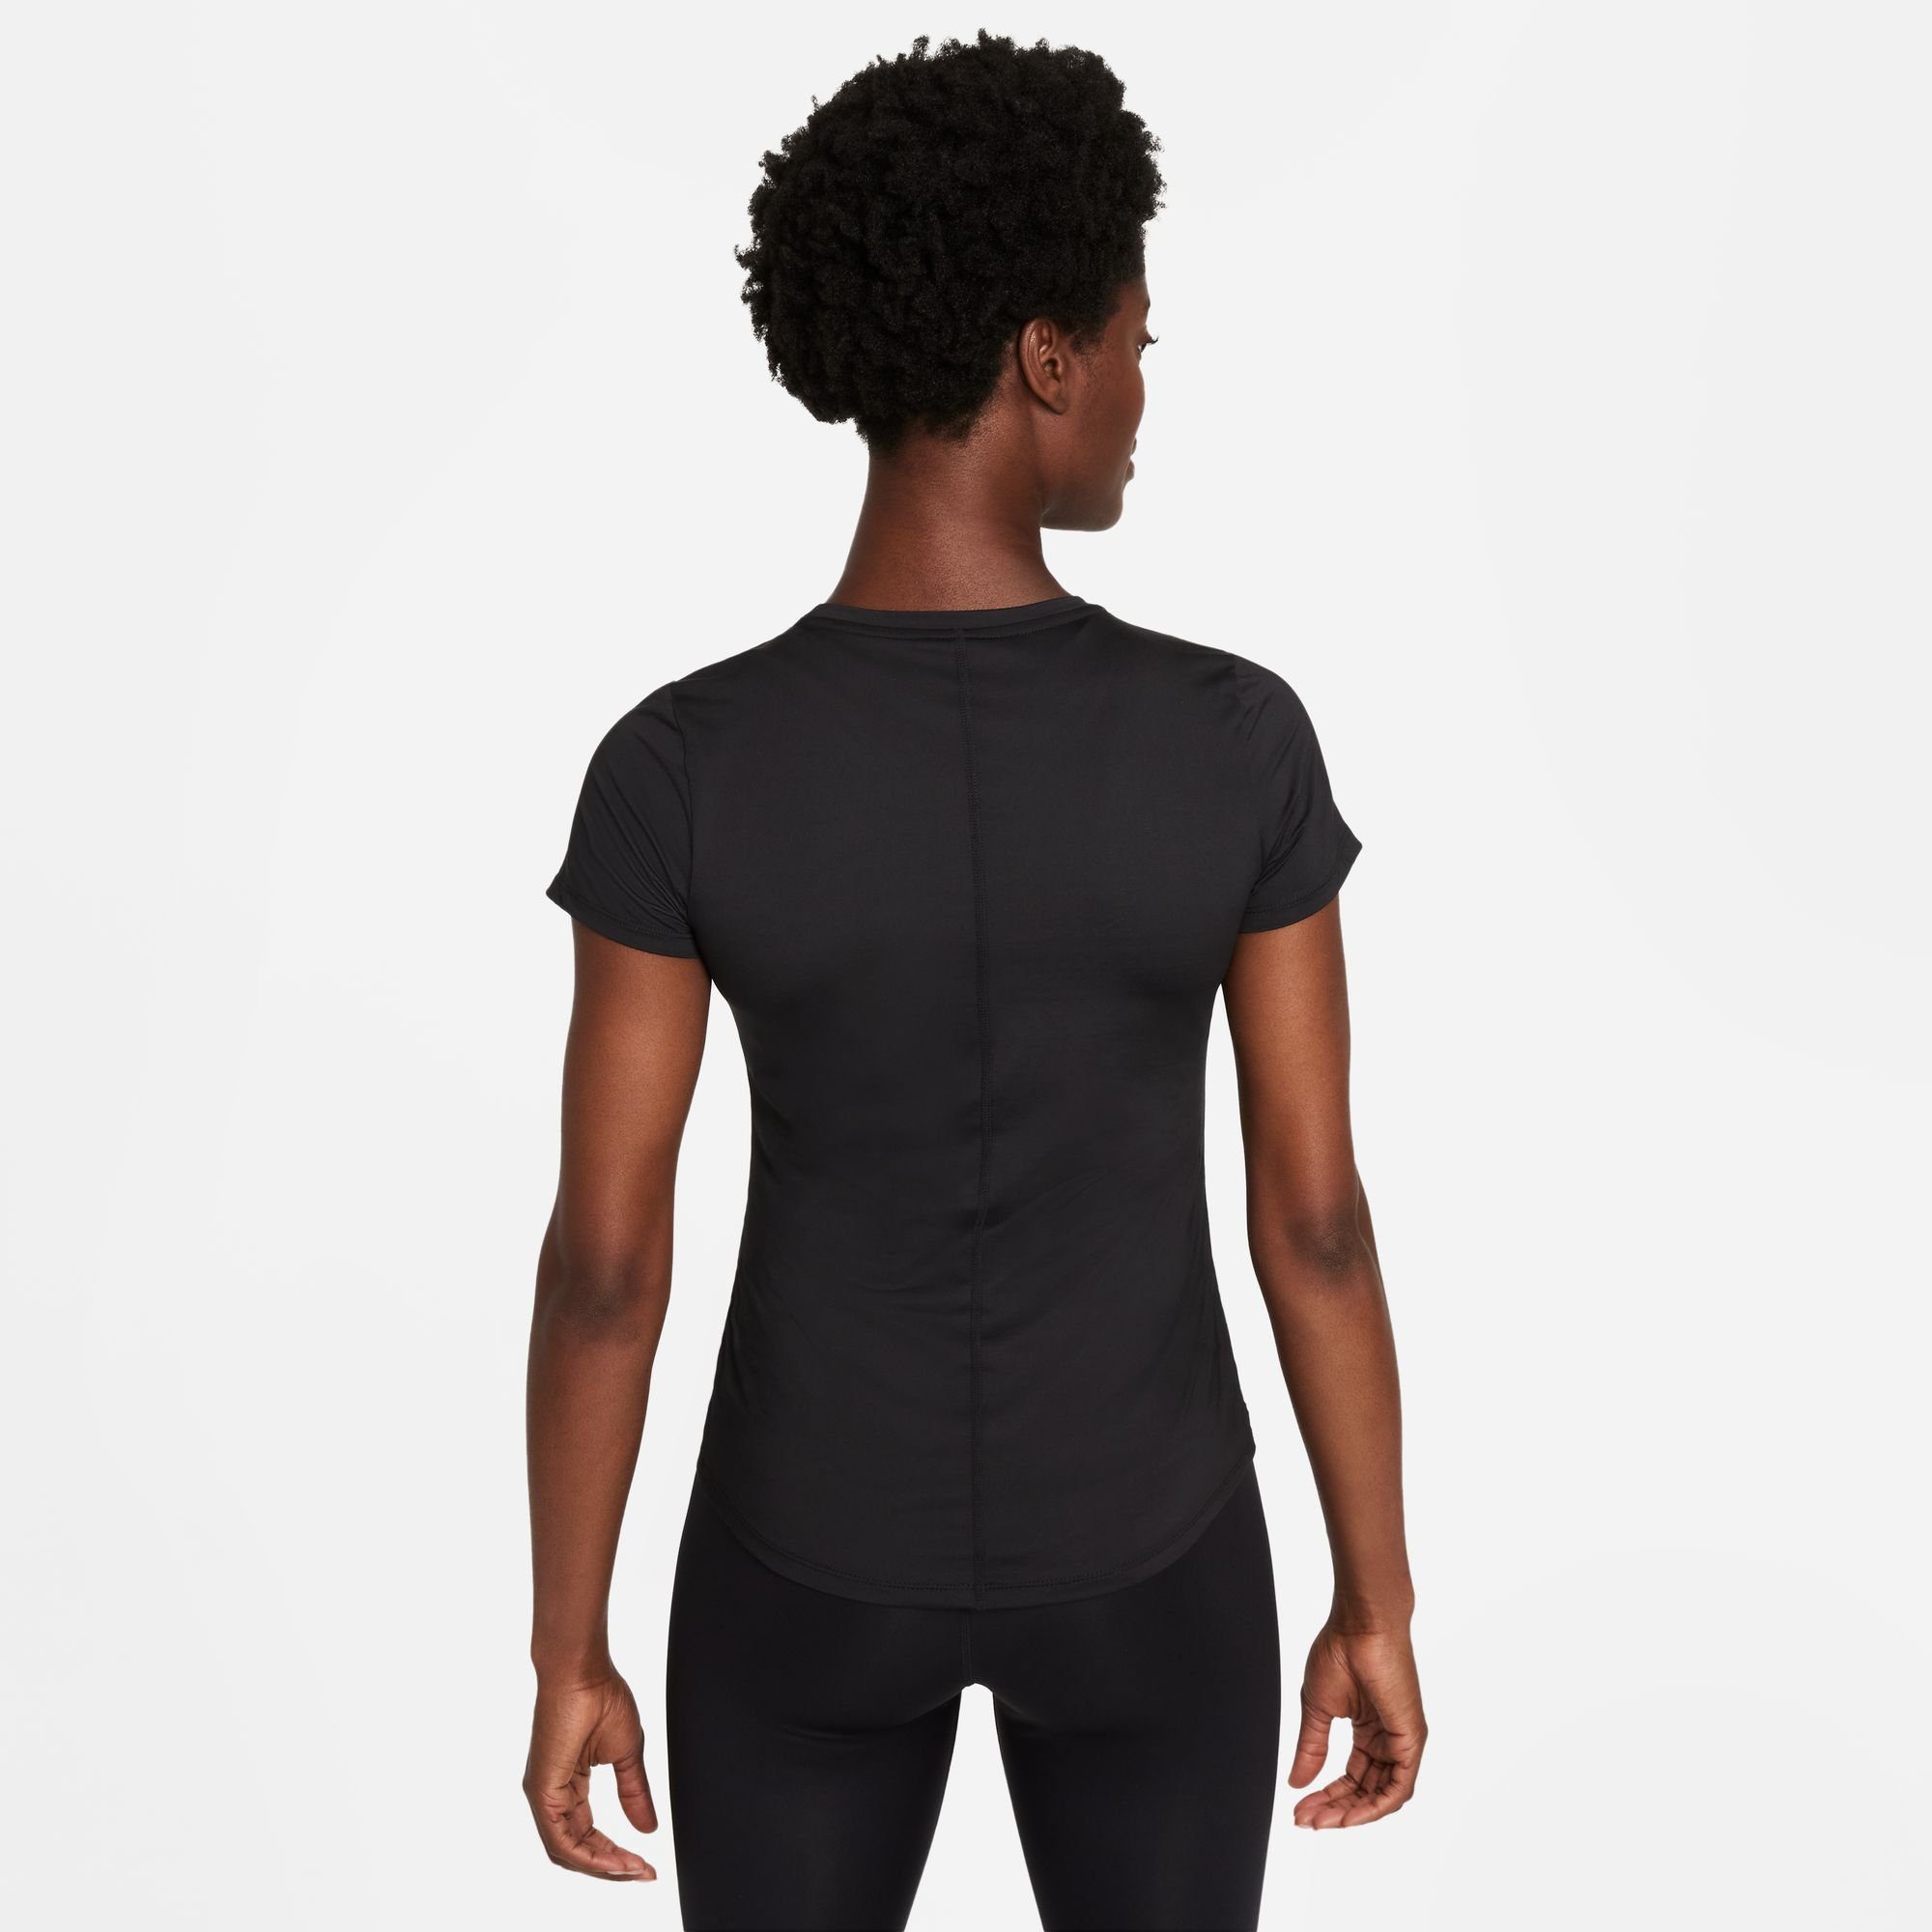 WOMEN'S Nike Trainingsshirt DRI-FIT schwarz SLIM TOP FIT SHORT-SLEEVE ONE